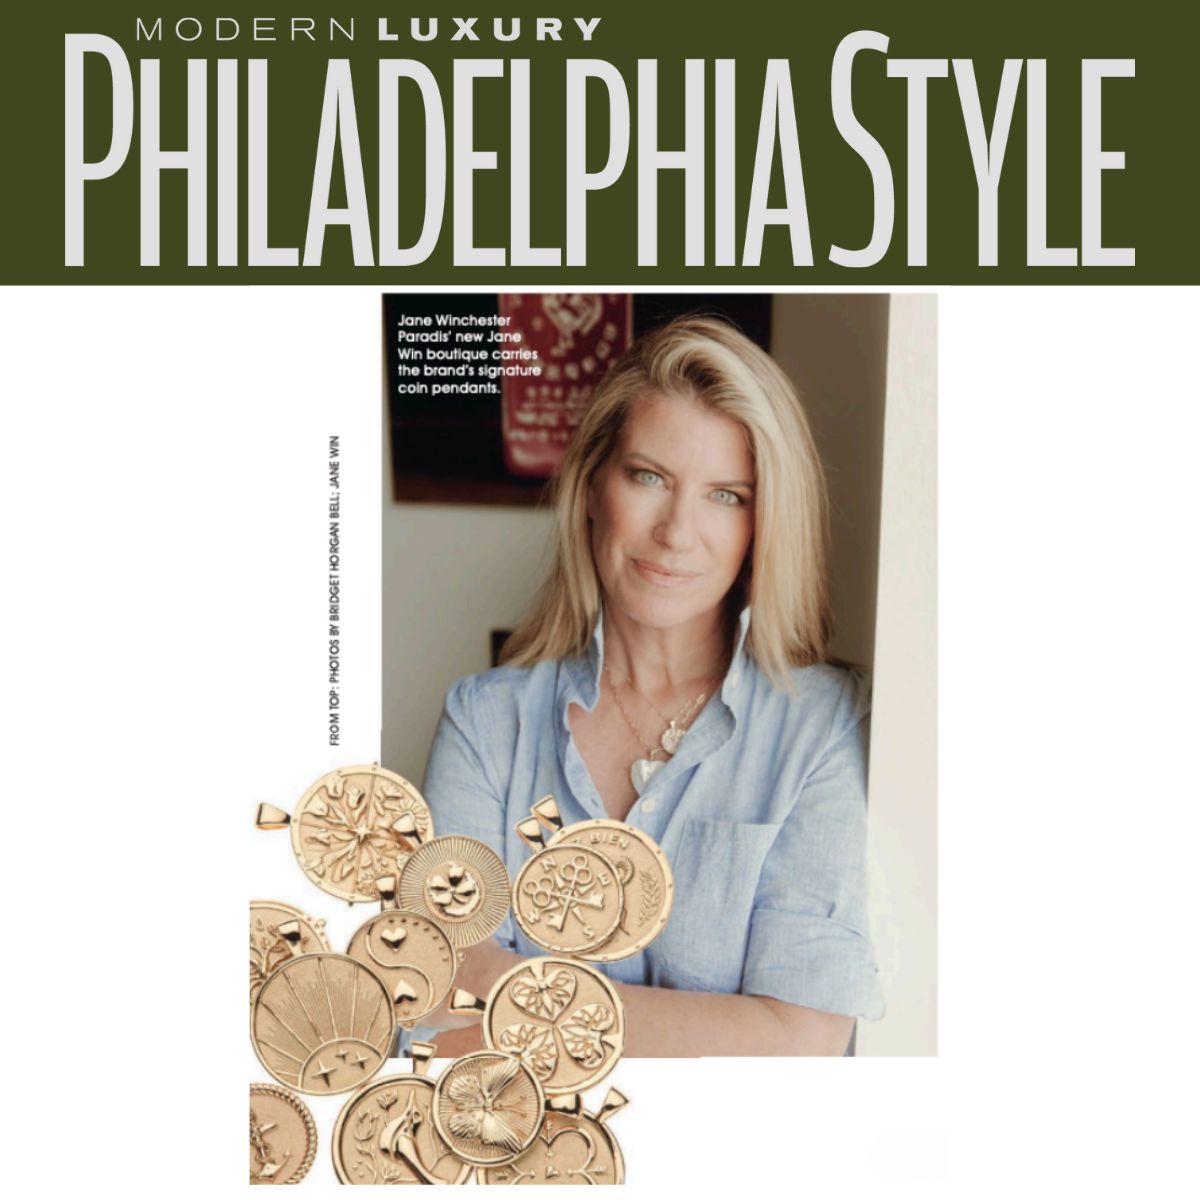 Press Highlight: Philadelphia Style Magazine Feature